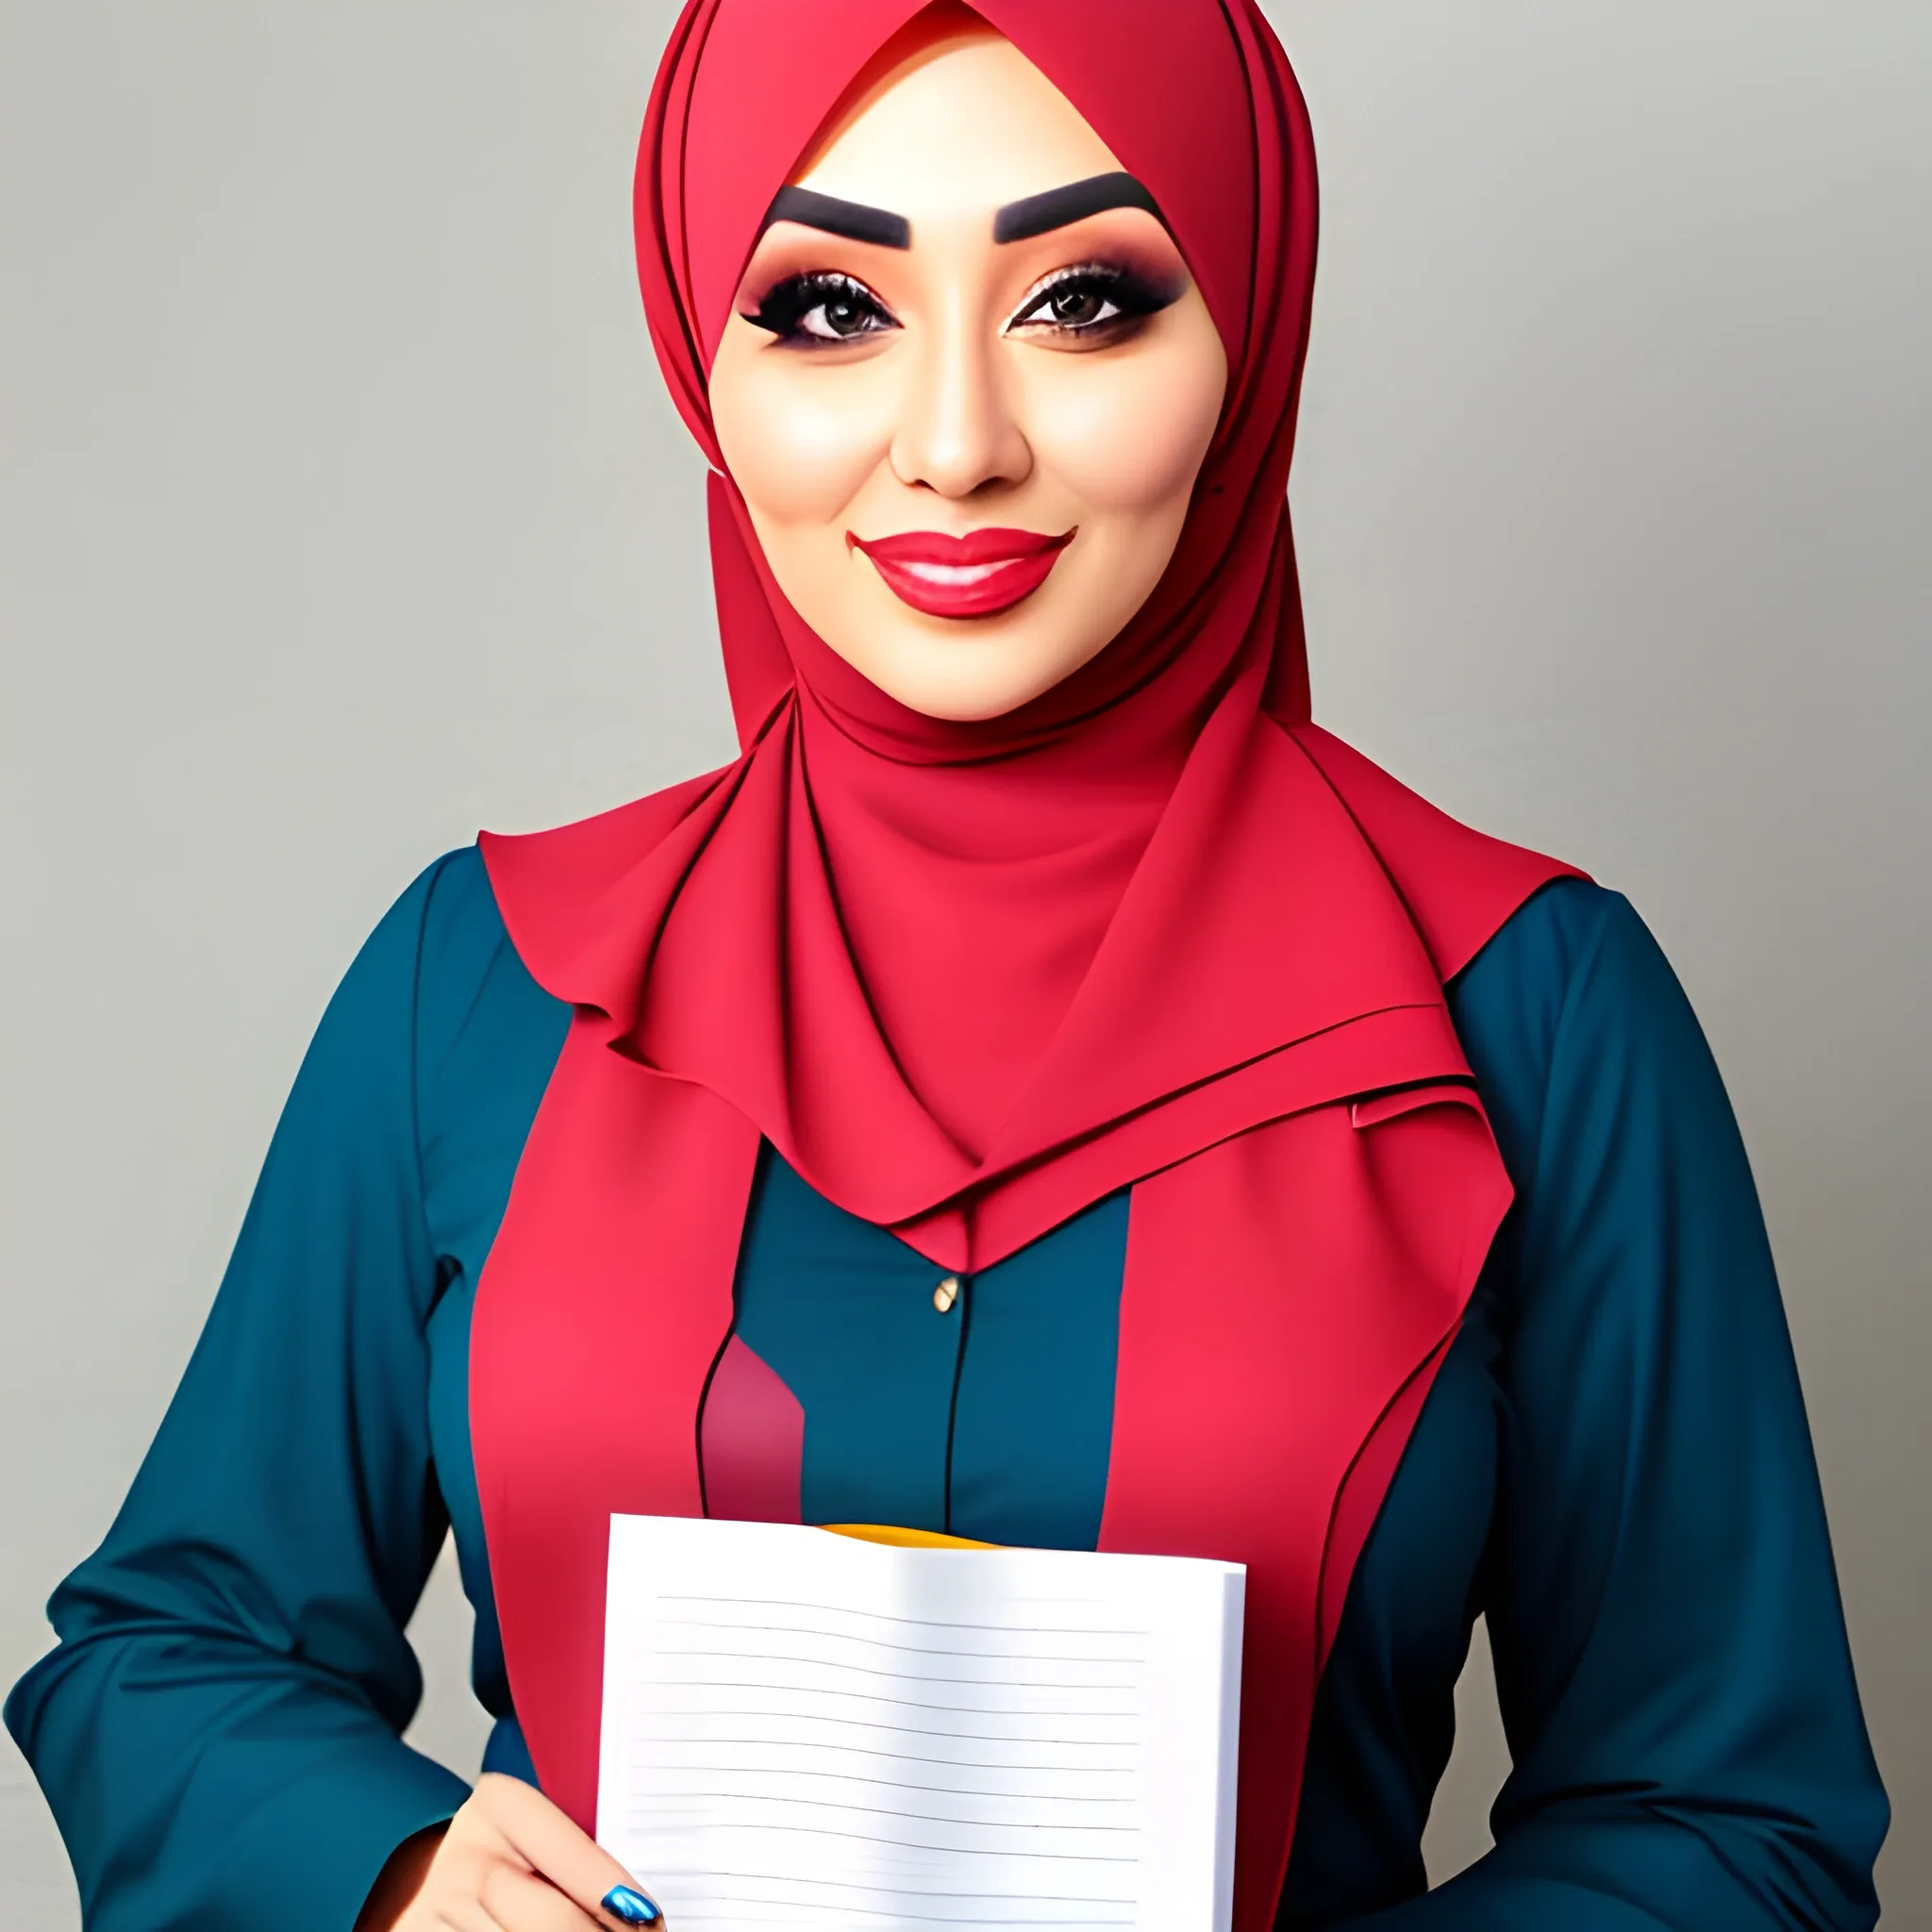 Hijab teacher in  classroom 

